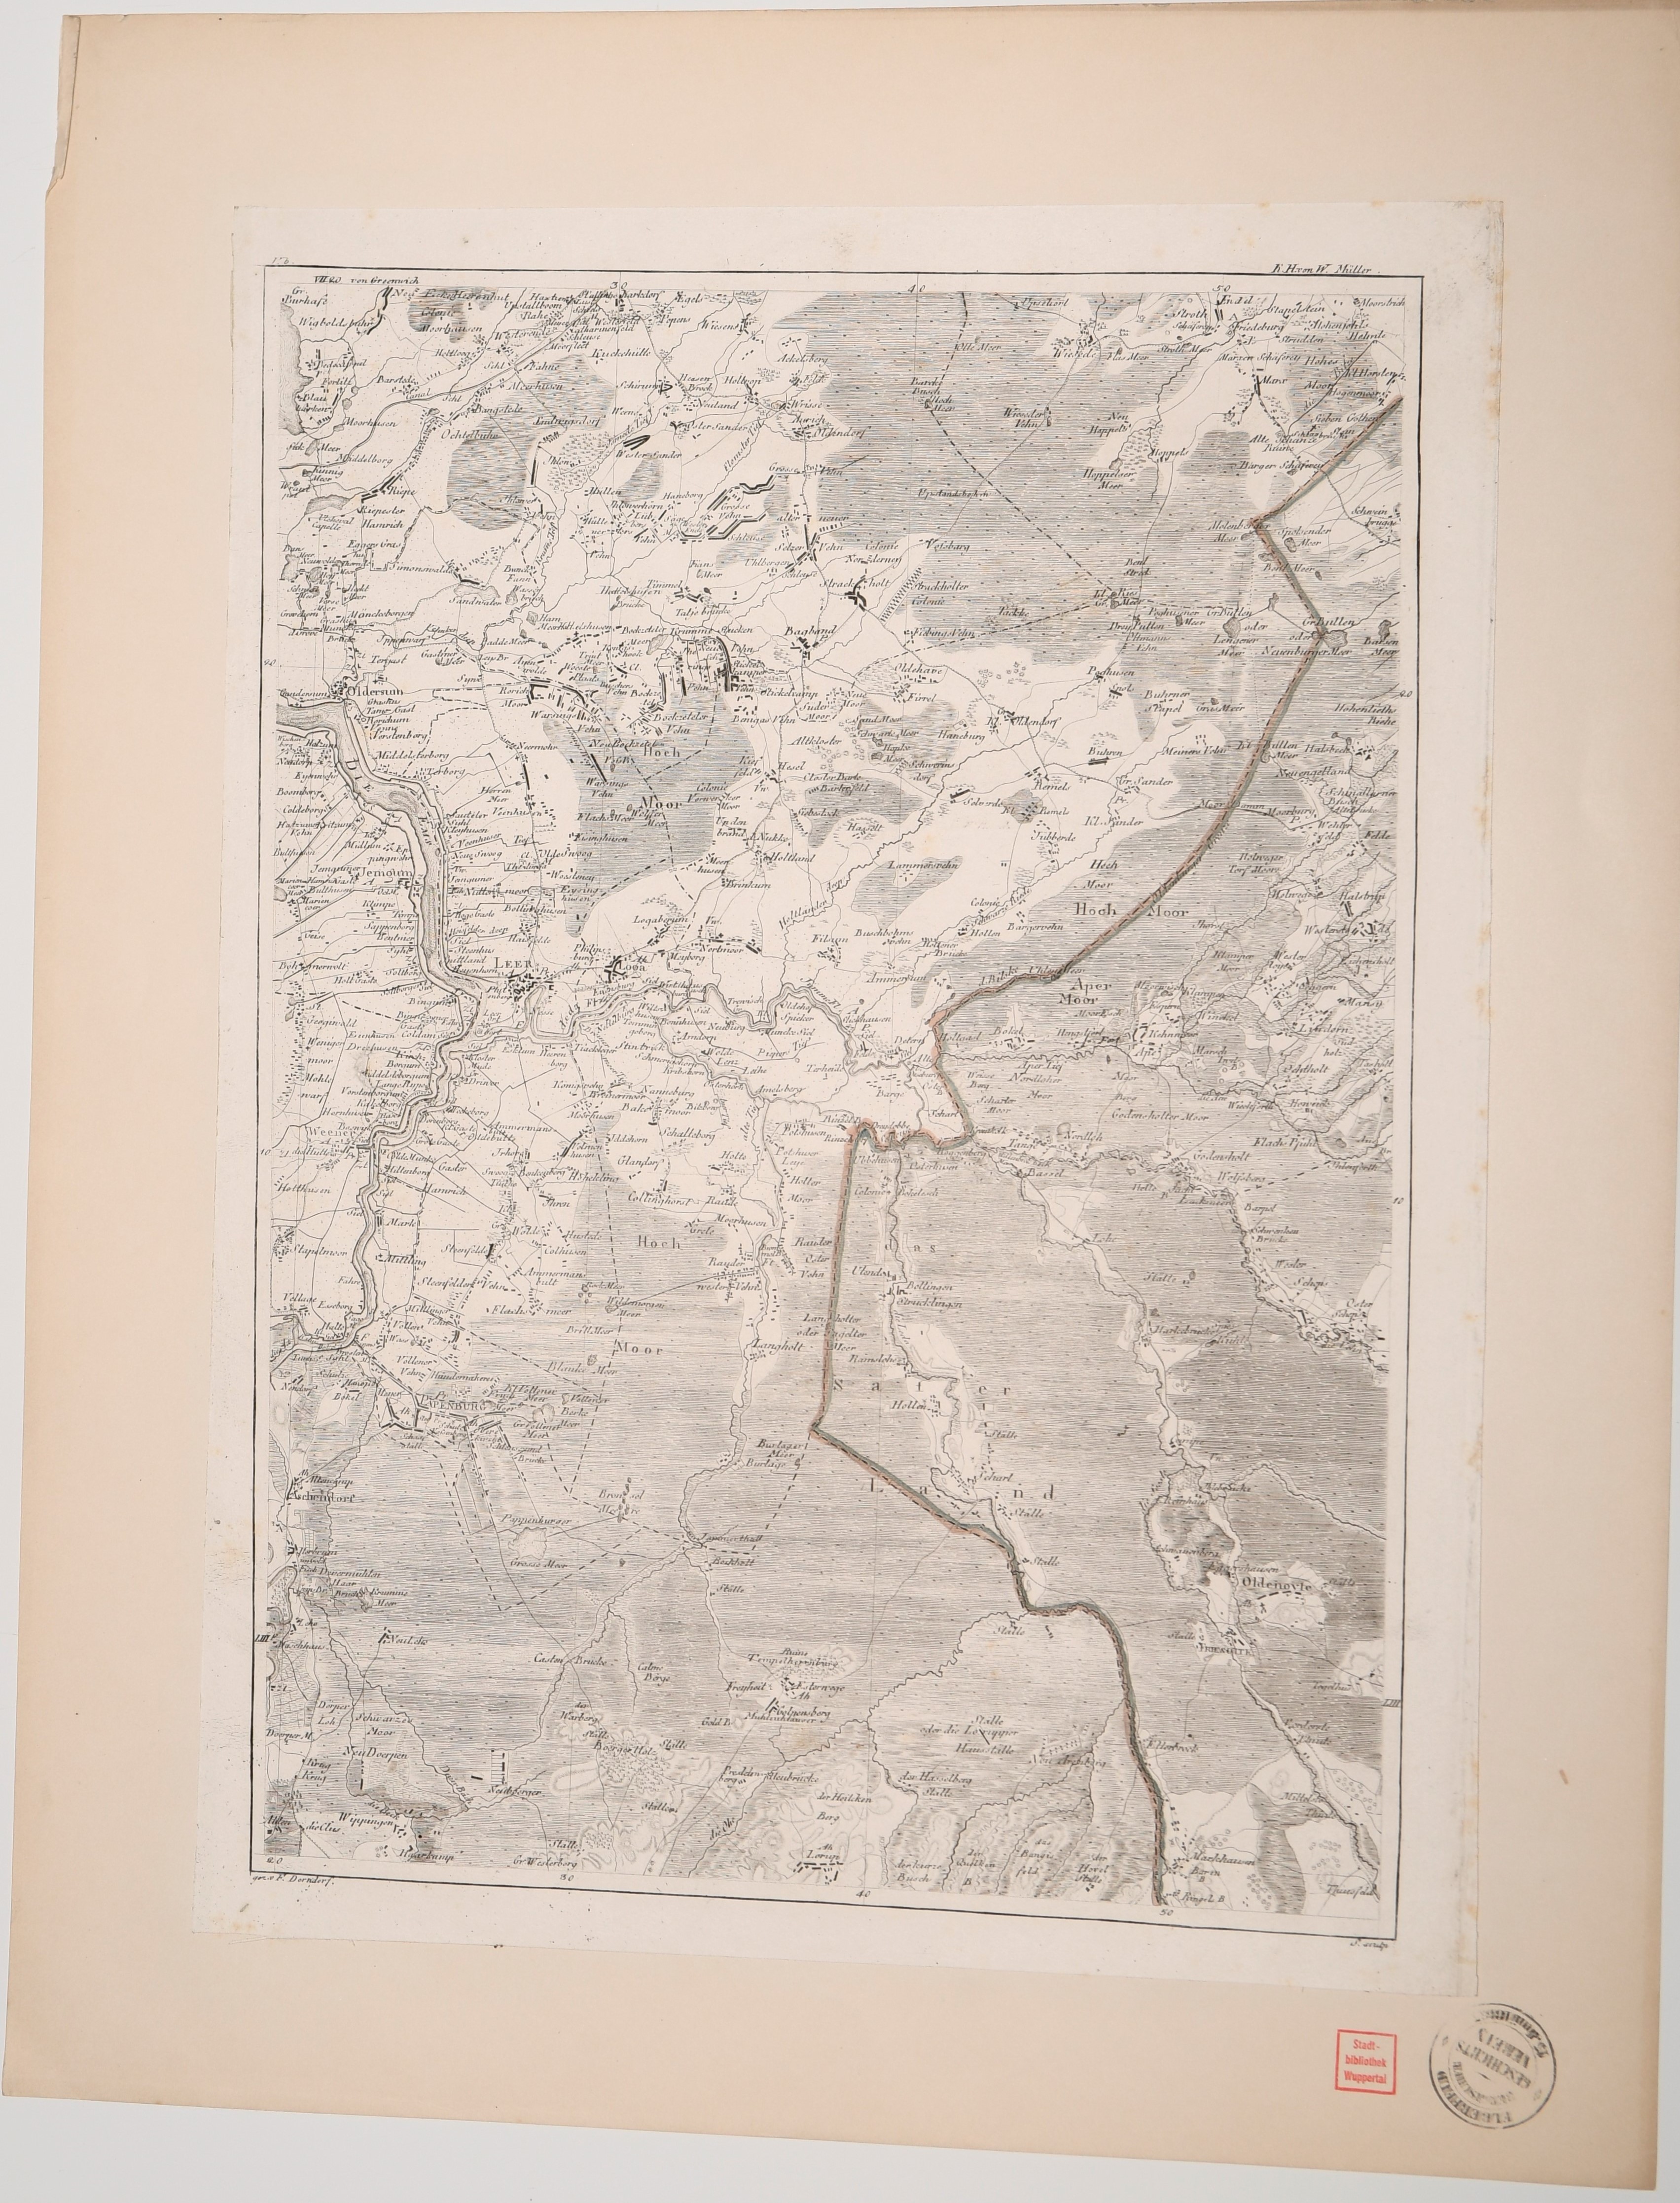 Moor-Karte Leer und Umgebung ((C) Sammlung Bergischer Geschichtsverein e.V. CC BY-NC)